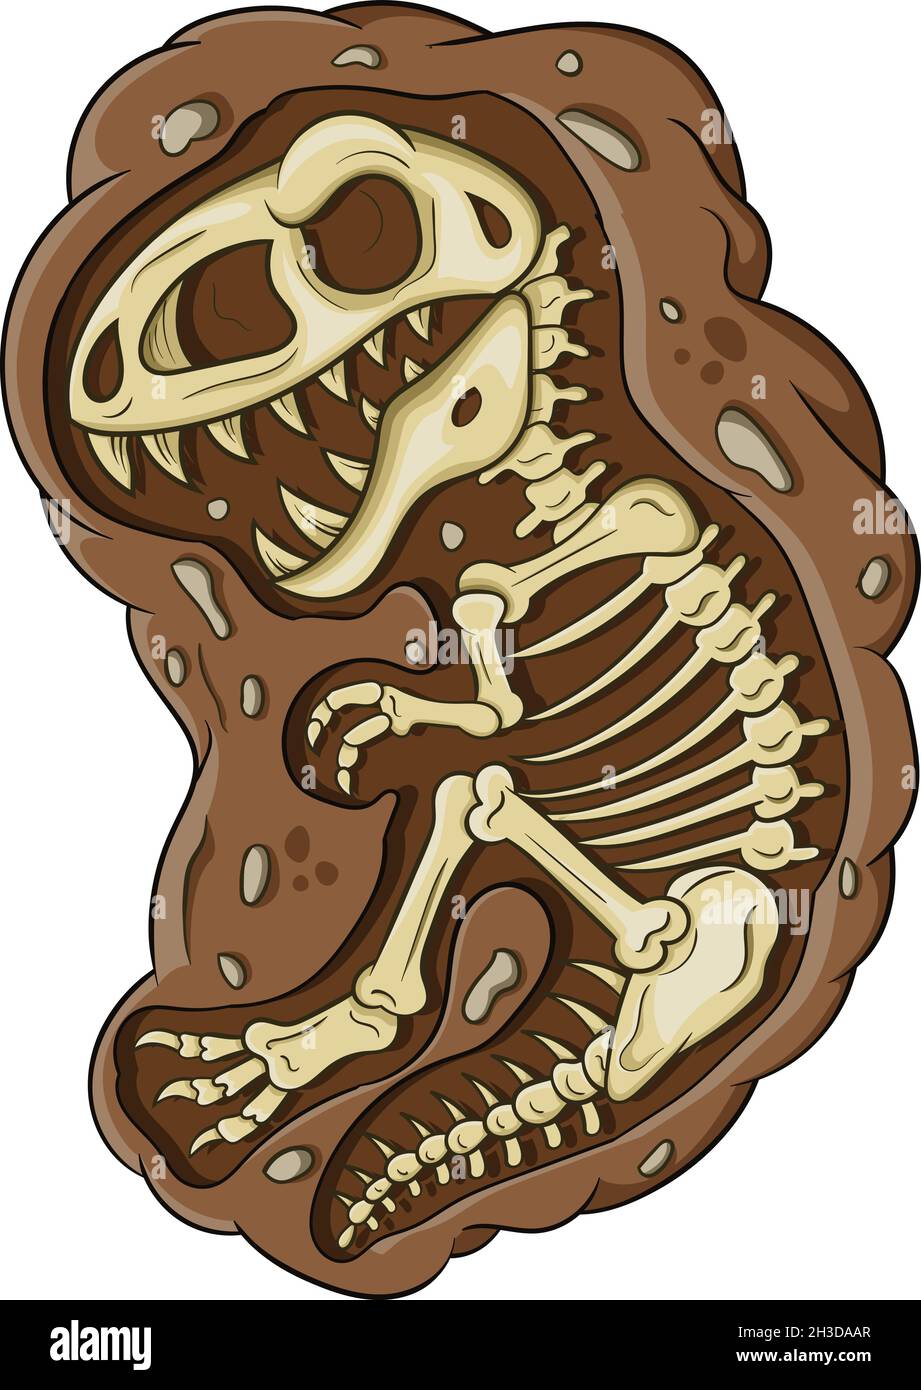 Ilustración de fósil de dinosaurio de dibujos animados Imagen Vector de  stock - Alamy